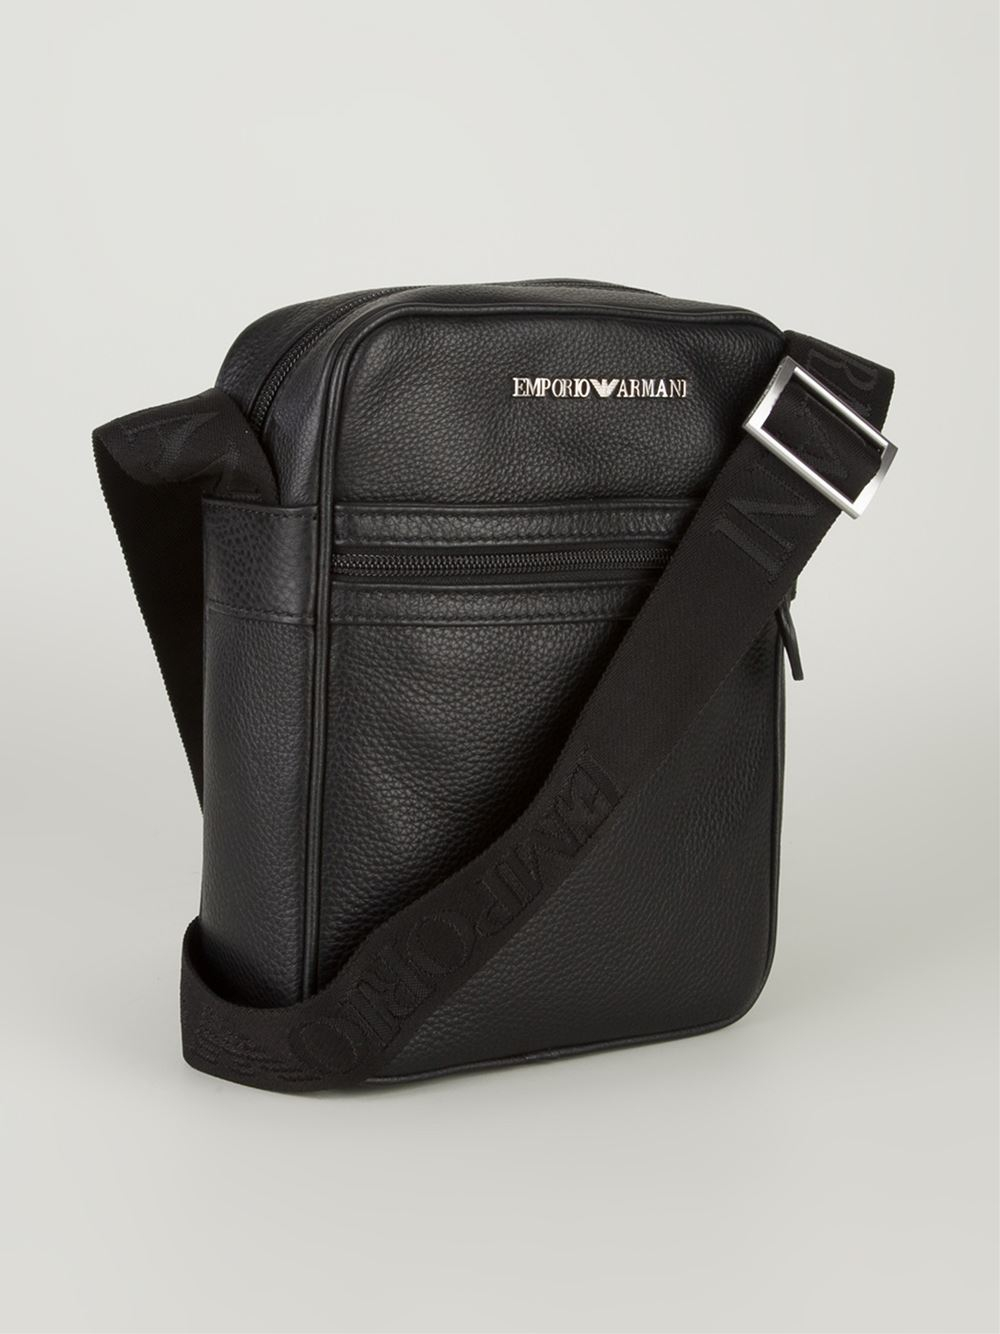 Emporio Armani Small Shoulder Bag in Black for Men - Lyst